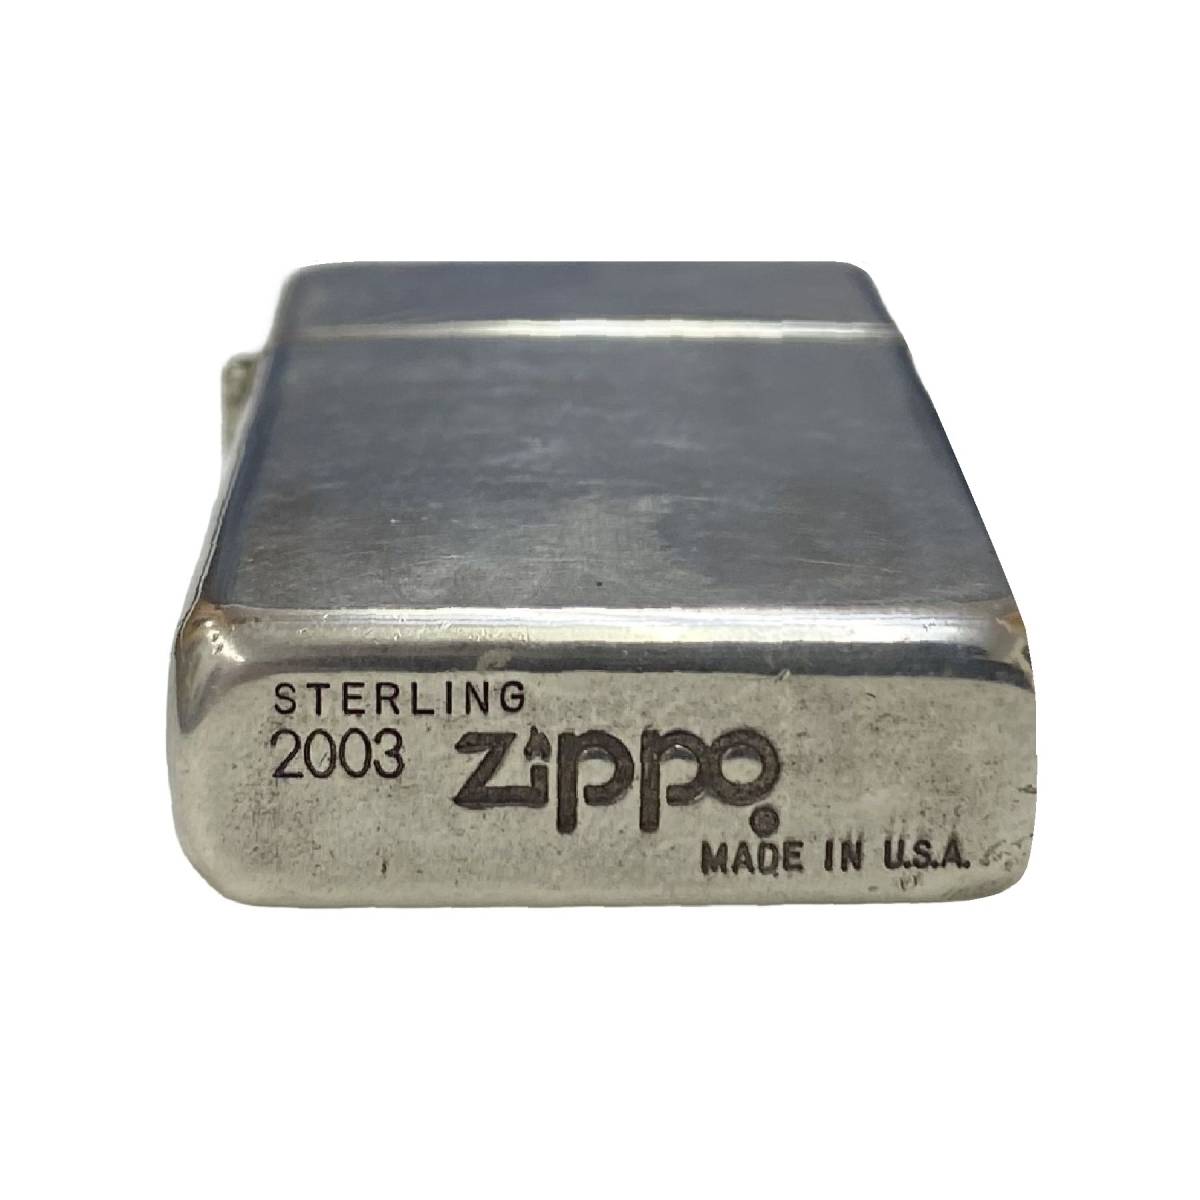 STERLING SILVER スターリング シルバー 925 2003年製 ヴィンテージ プレーン スリム Zippo ジッポ ジッポー オイル ライター 銀無垢 USA製_画像8